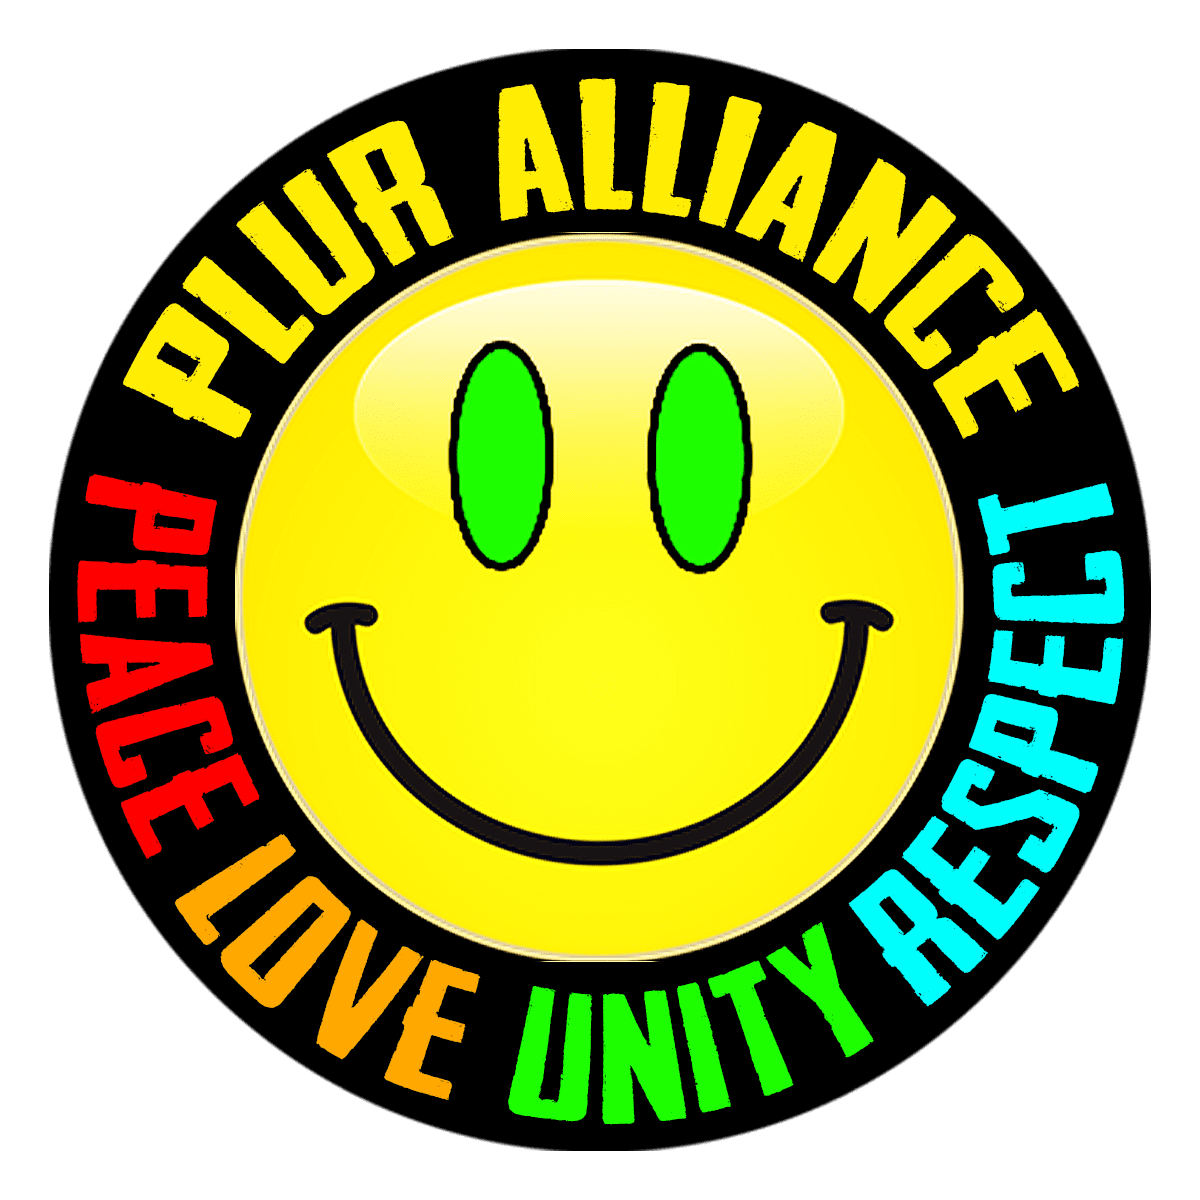 PLUR Alliance logo